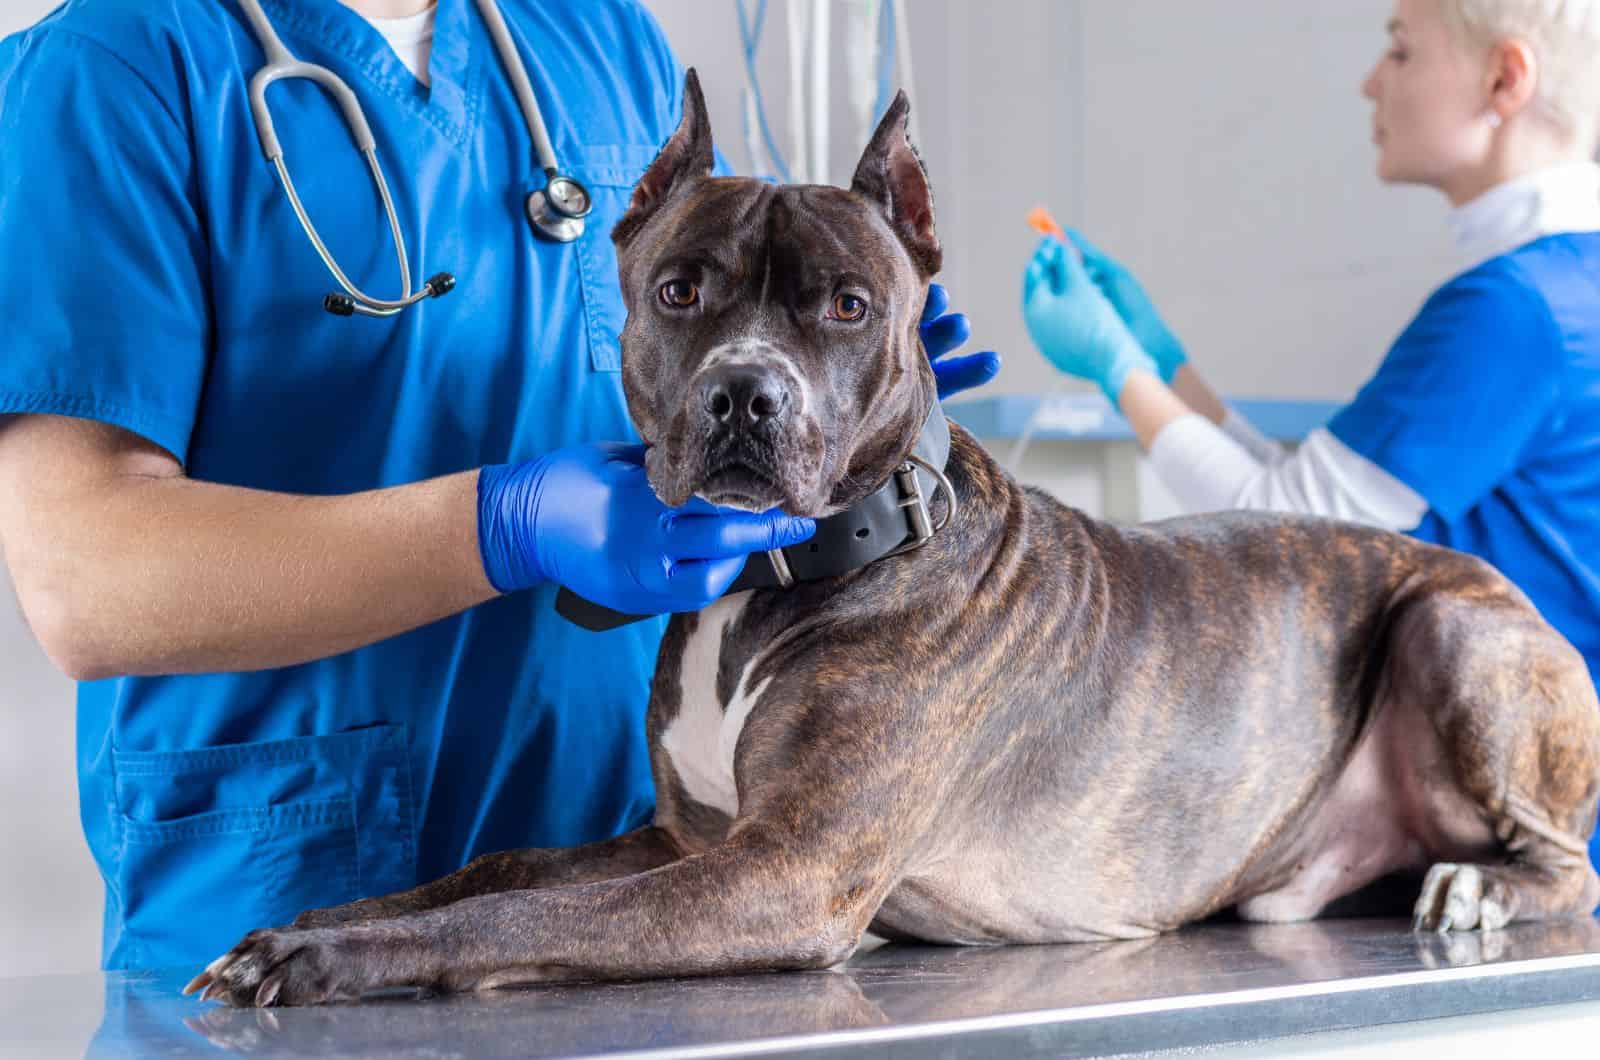 American Bulldog Pitbull Mix doga at vet's